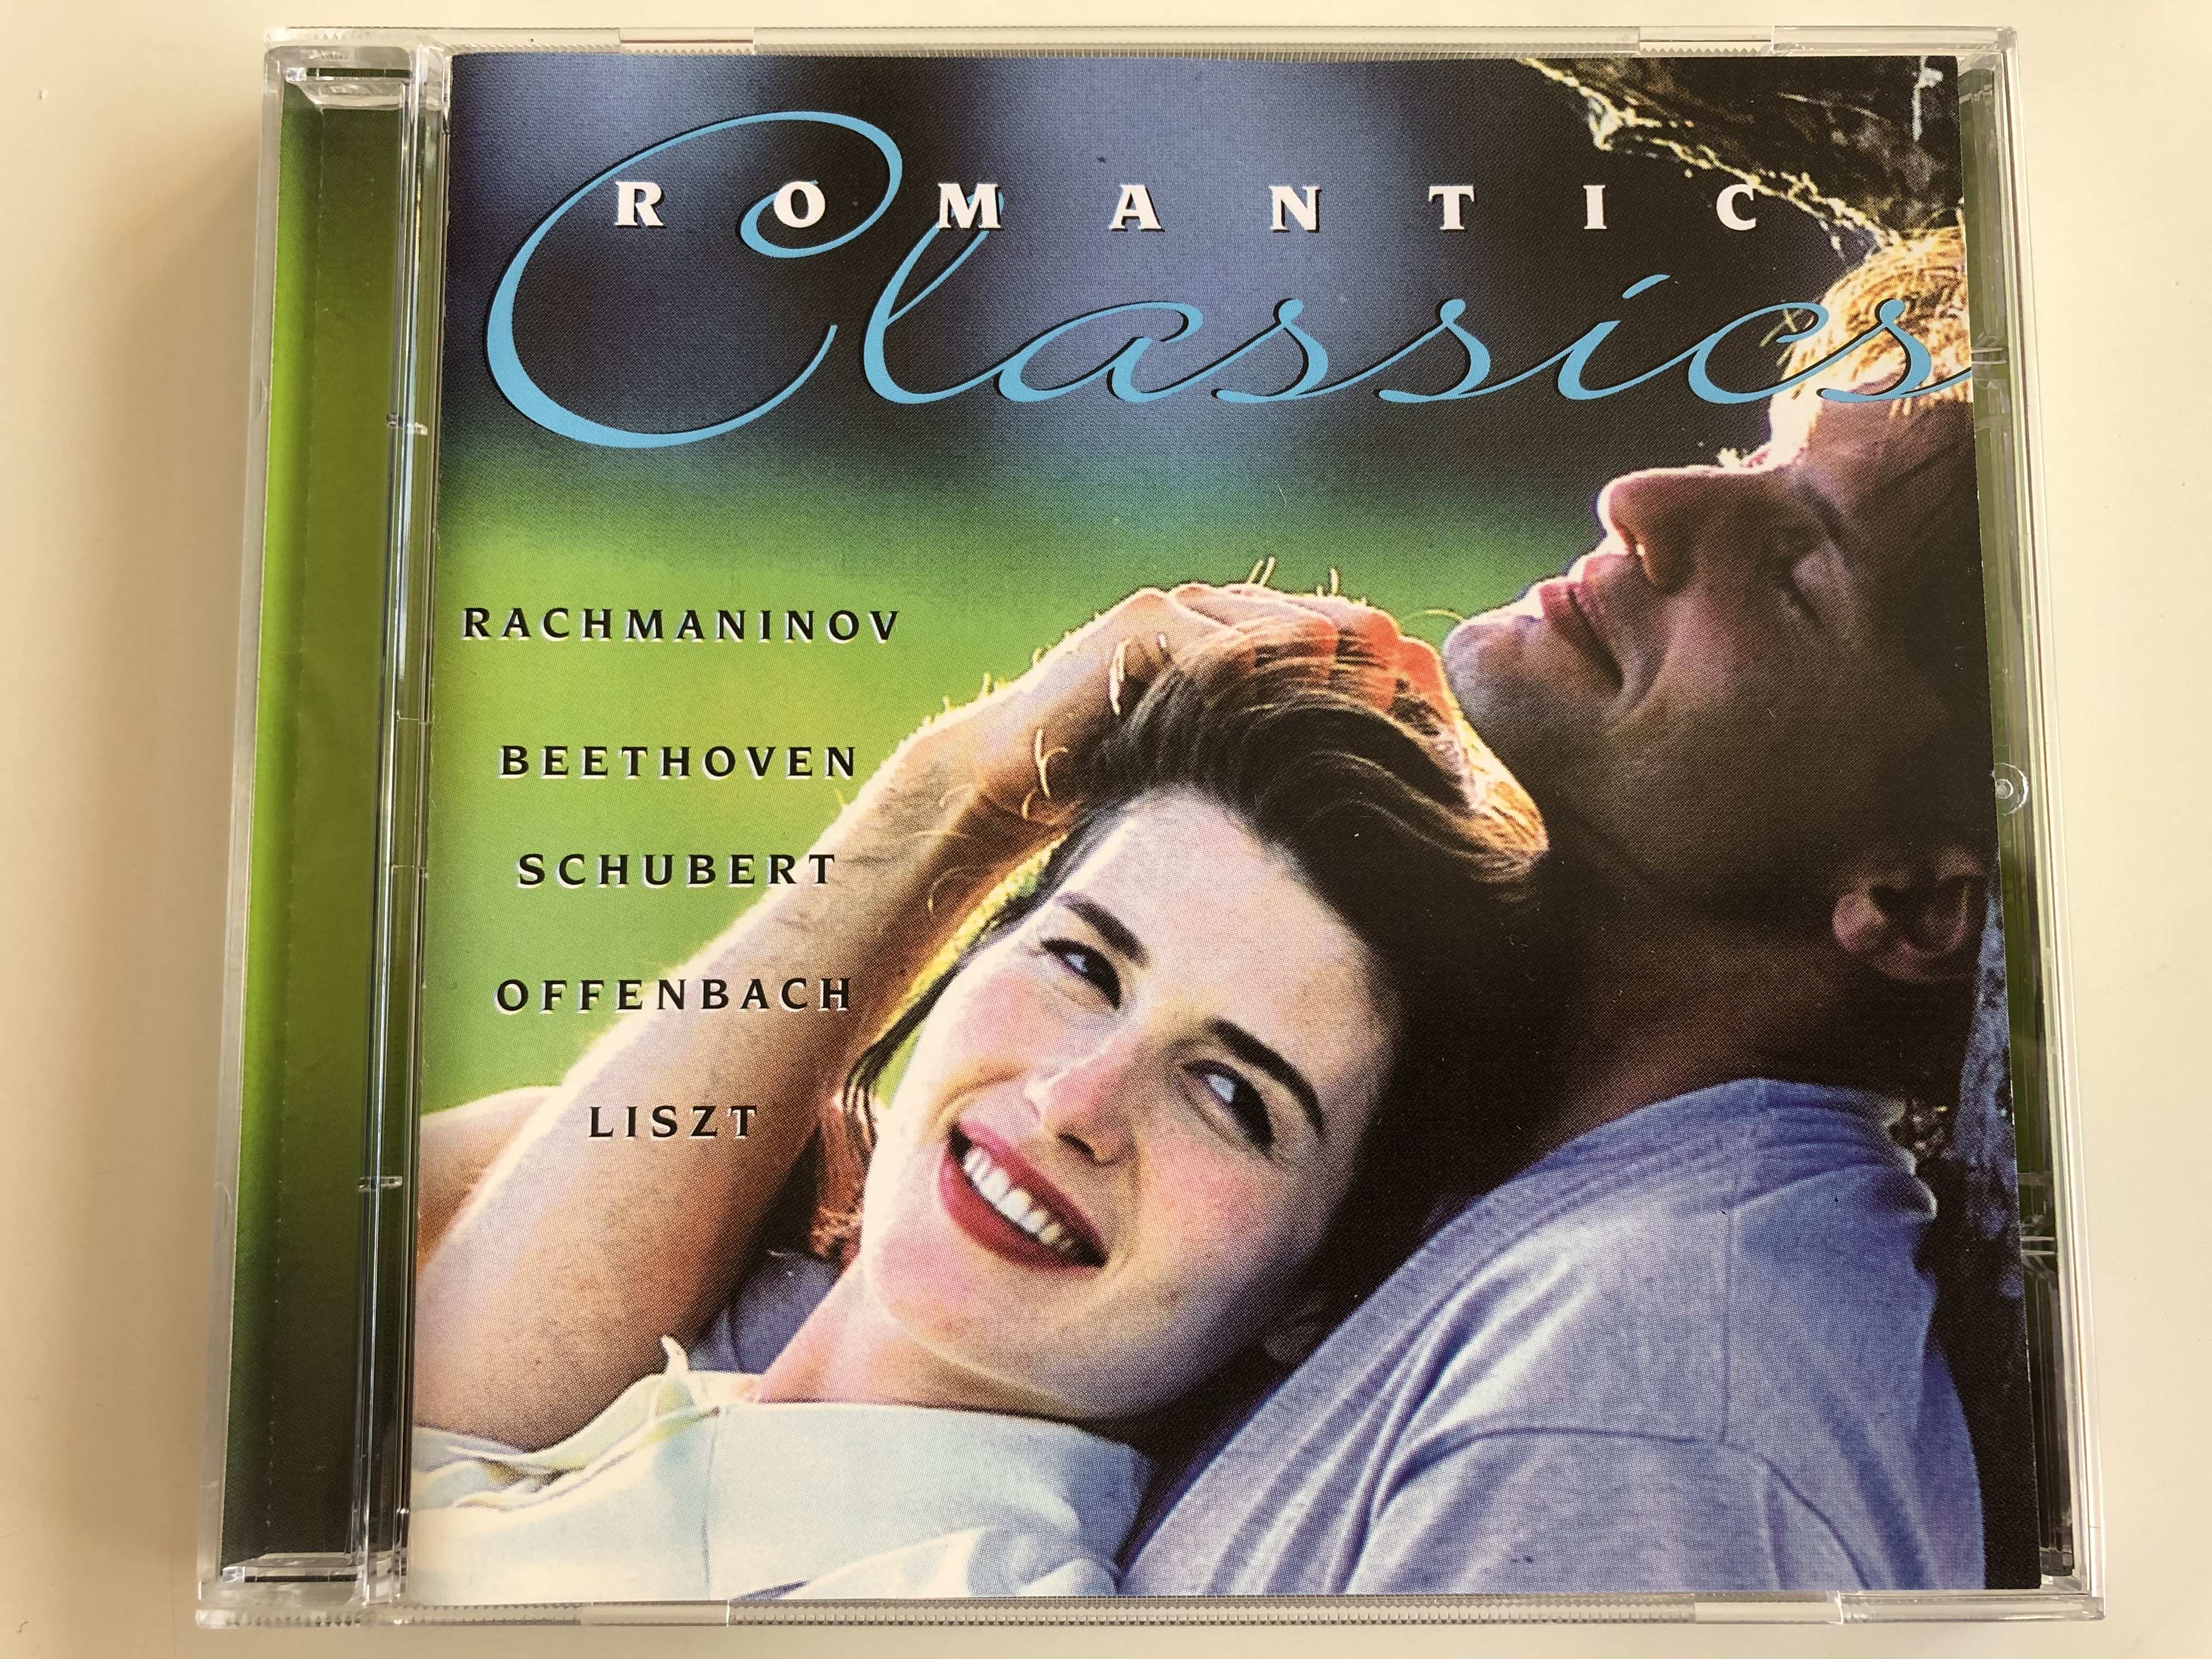 romantic-classics-rachmaninov-beethoven-schubert-offenbach-liszt-disky-audio-cd-1996-dc-700892-1-.jpg